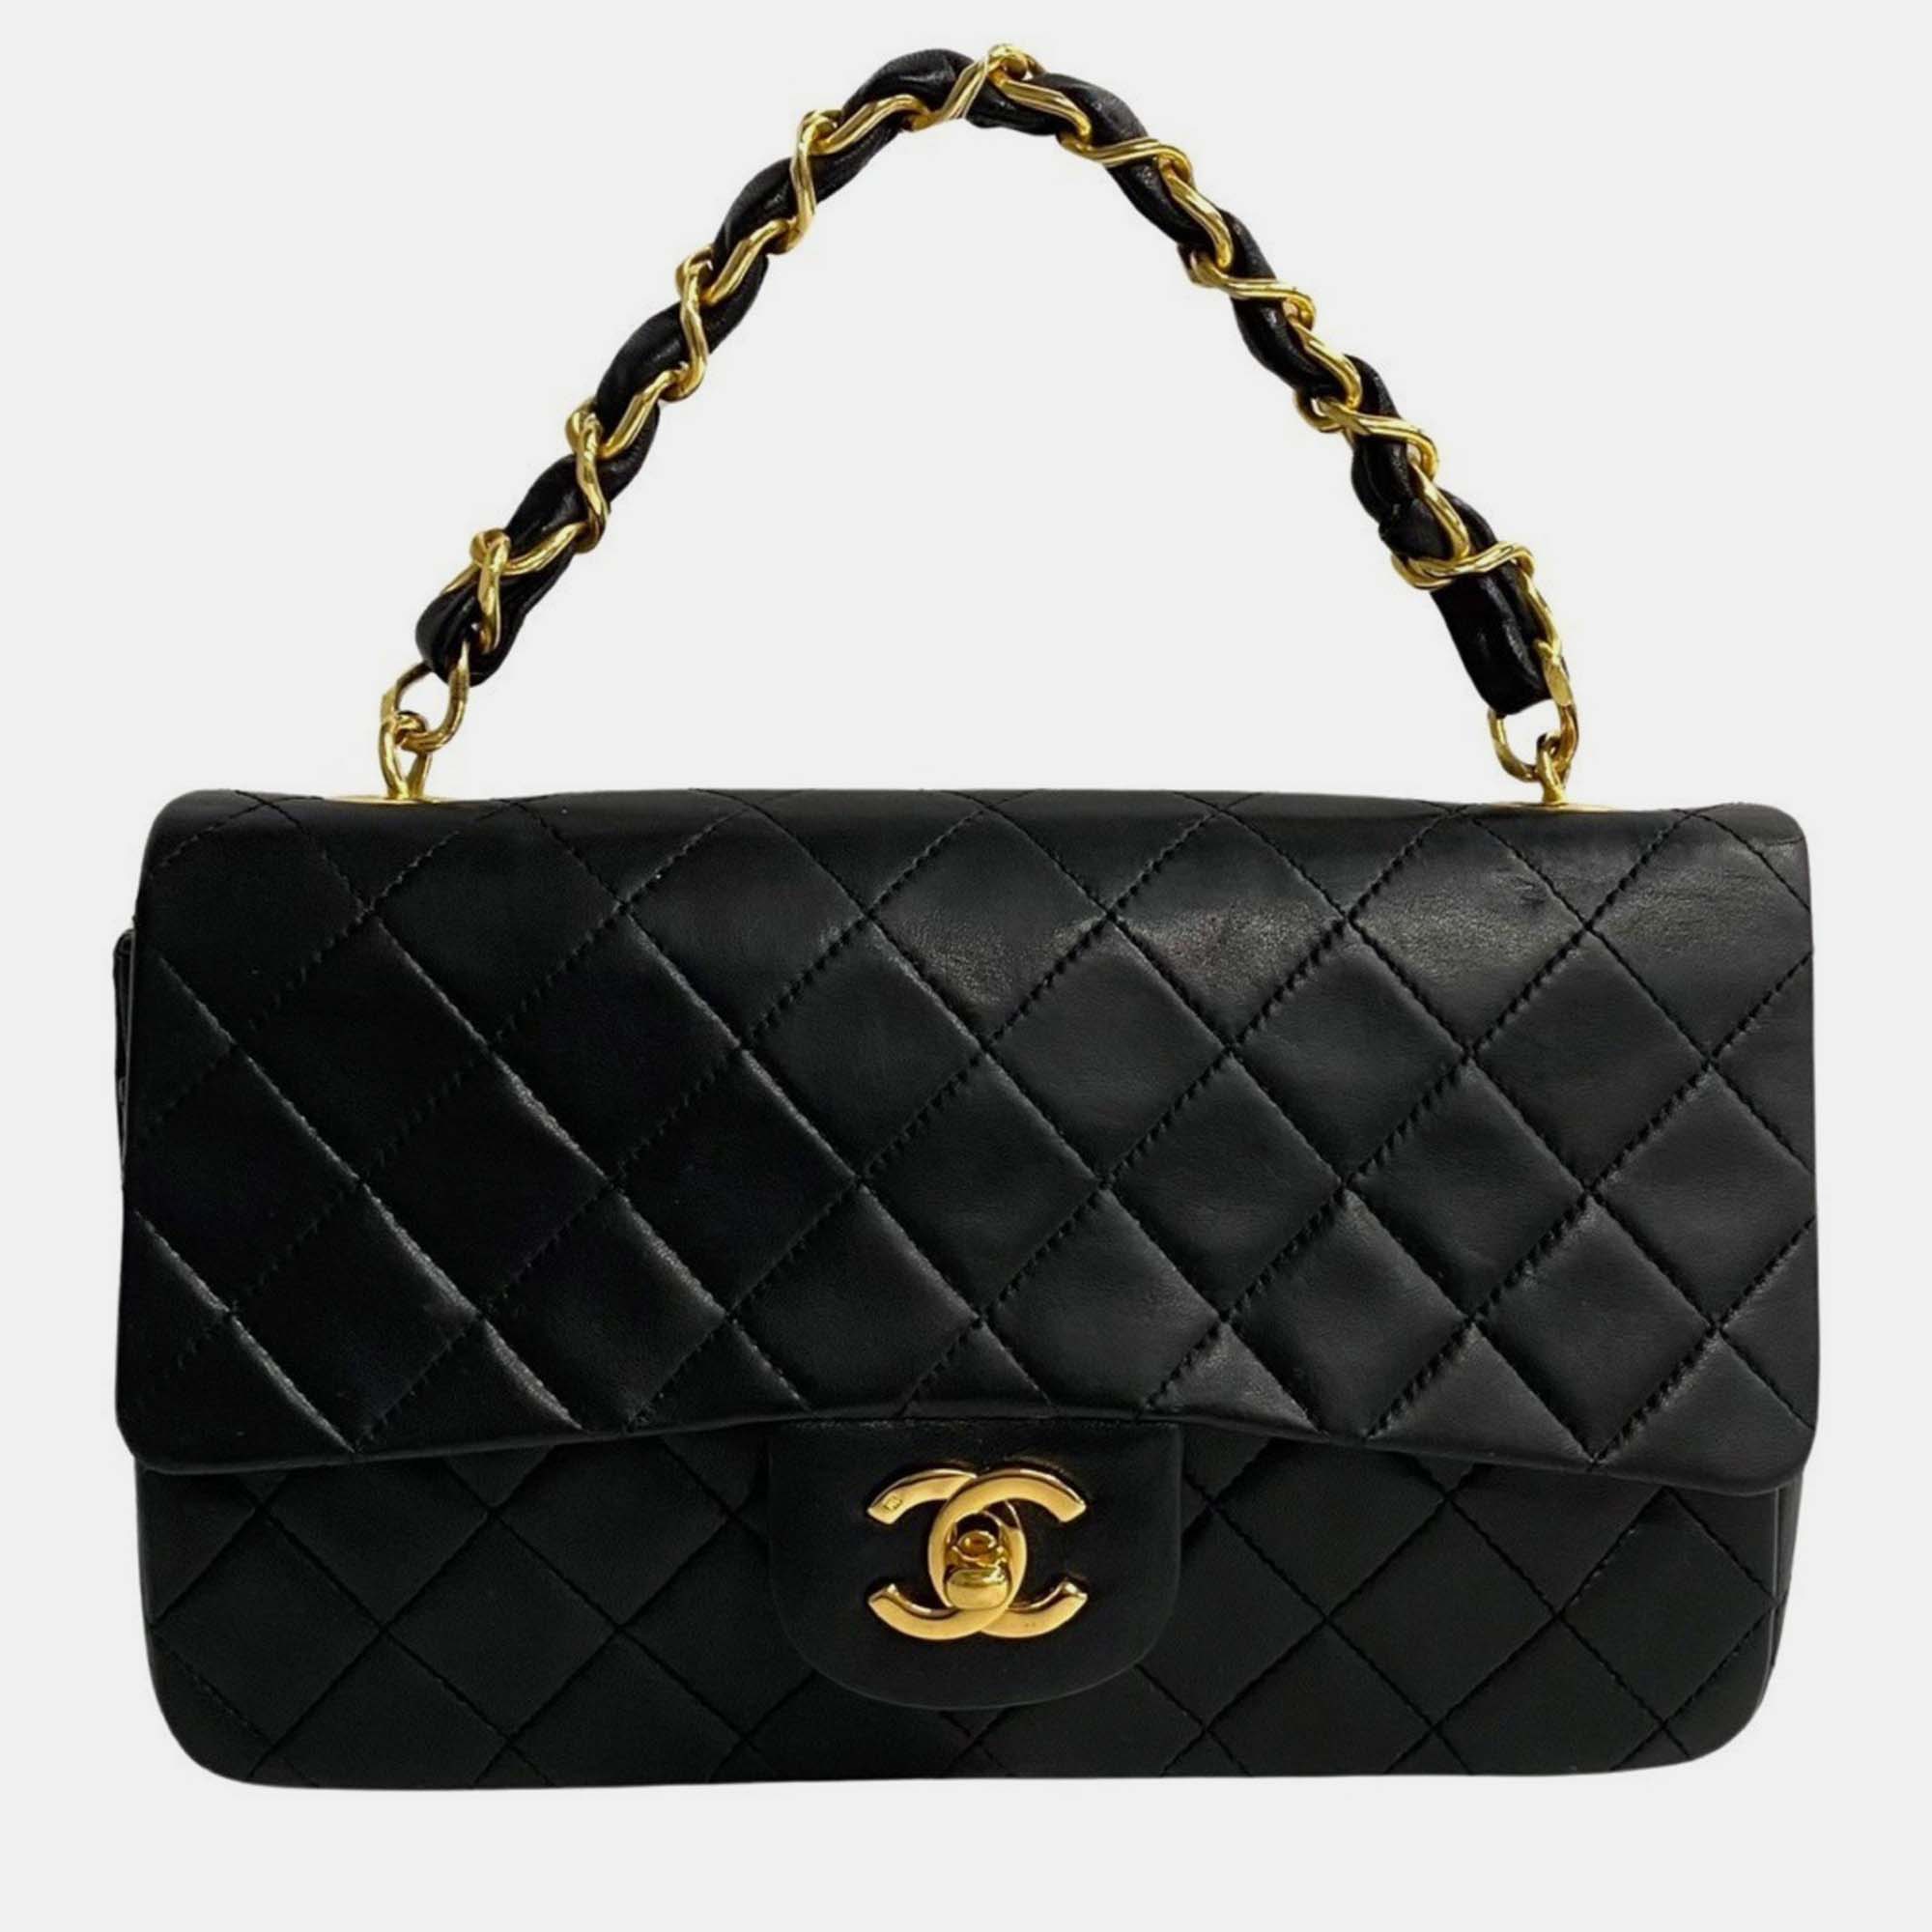 Chanel black lambskin leather chain handbag